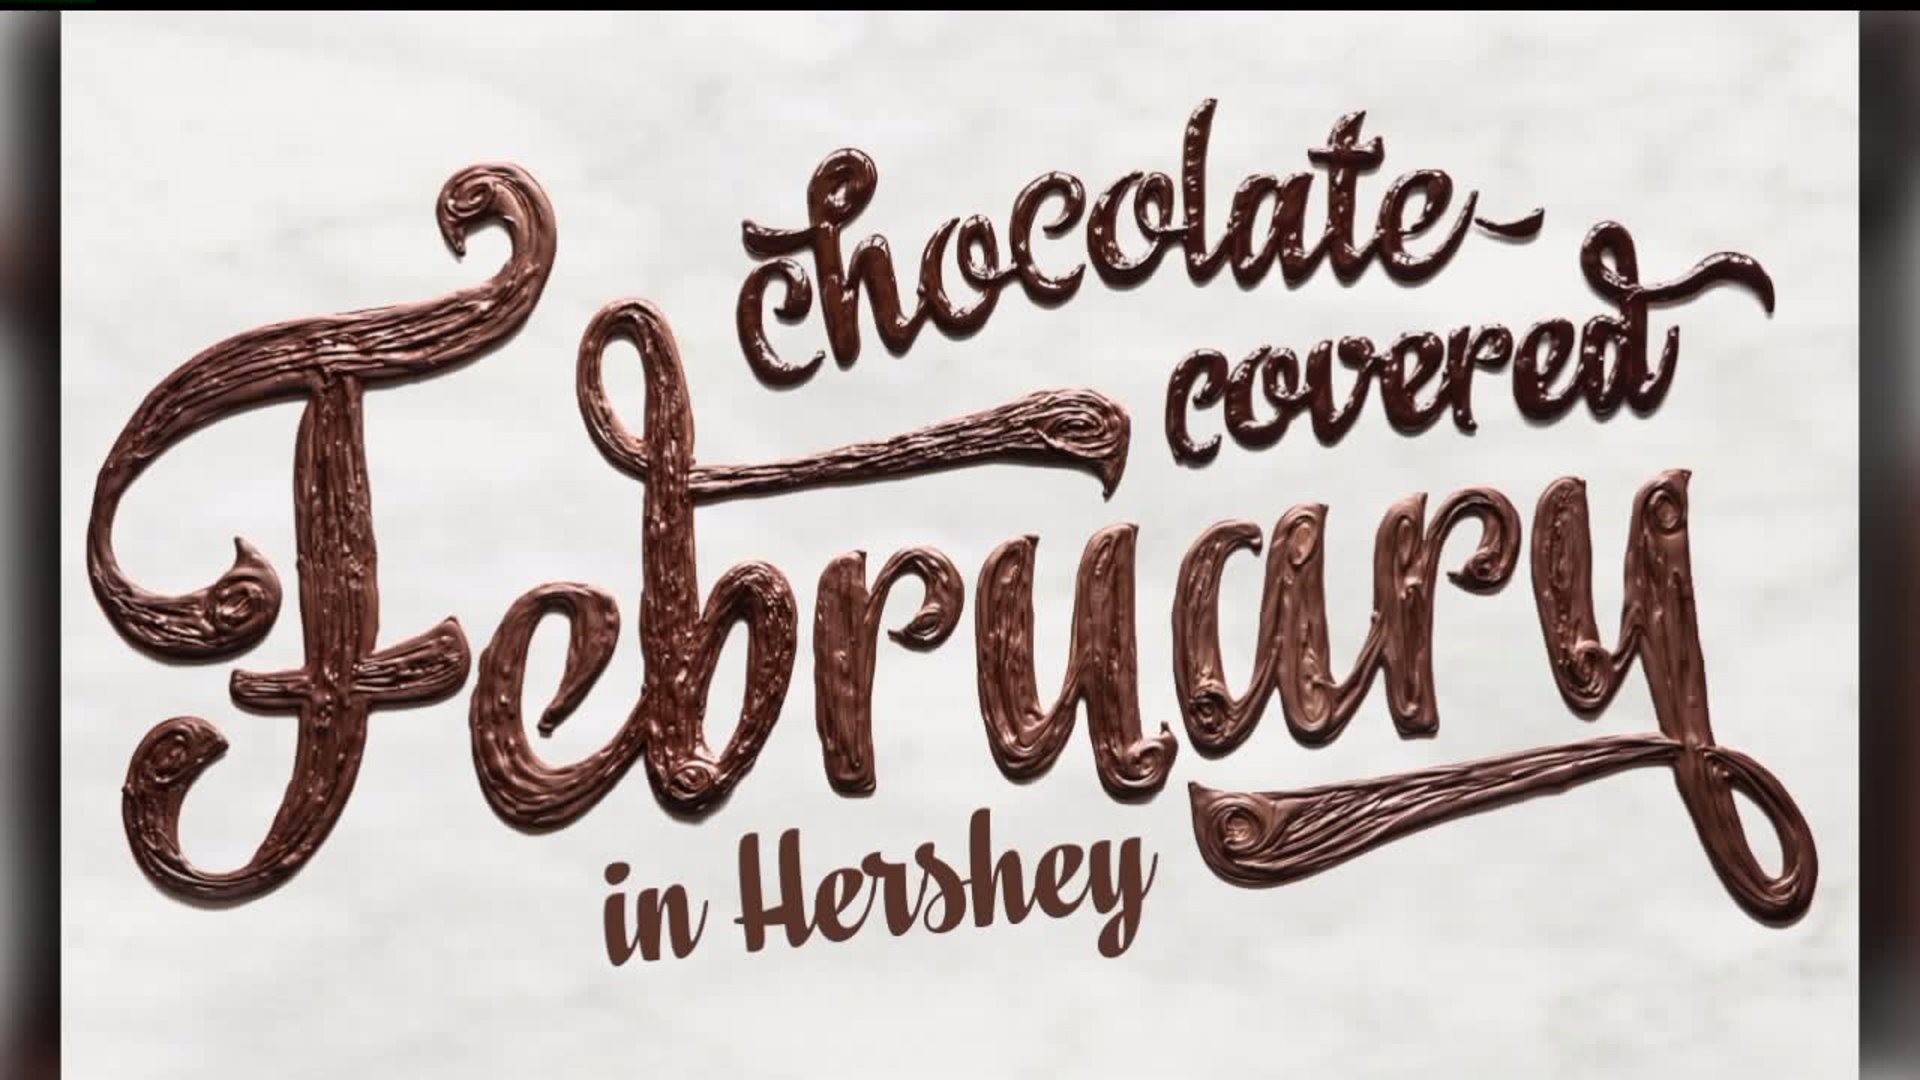 Chocolate Covered February in Hershey